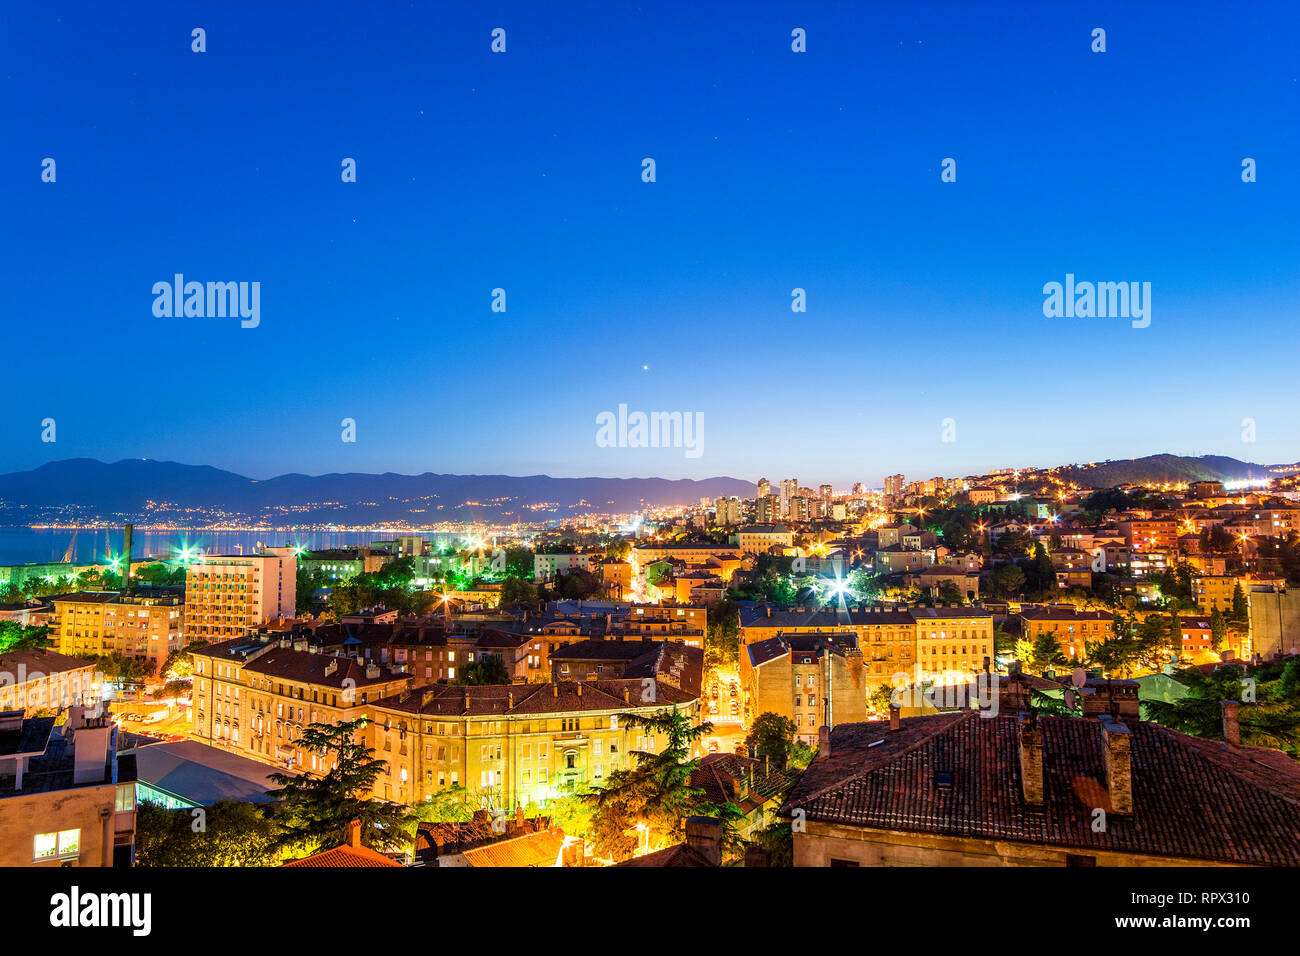 Cityscape at night, Rijeka, Croatia Stock Photo